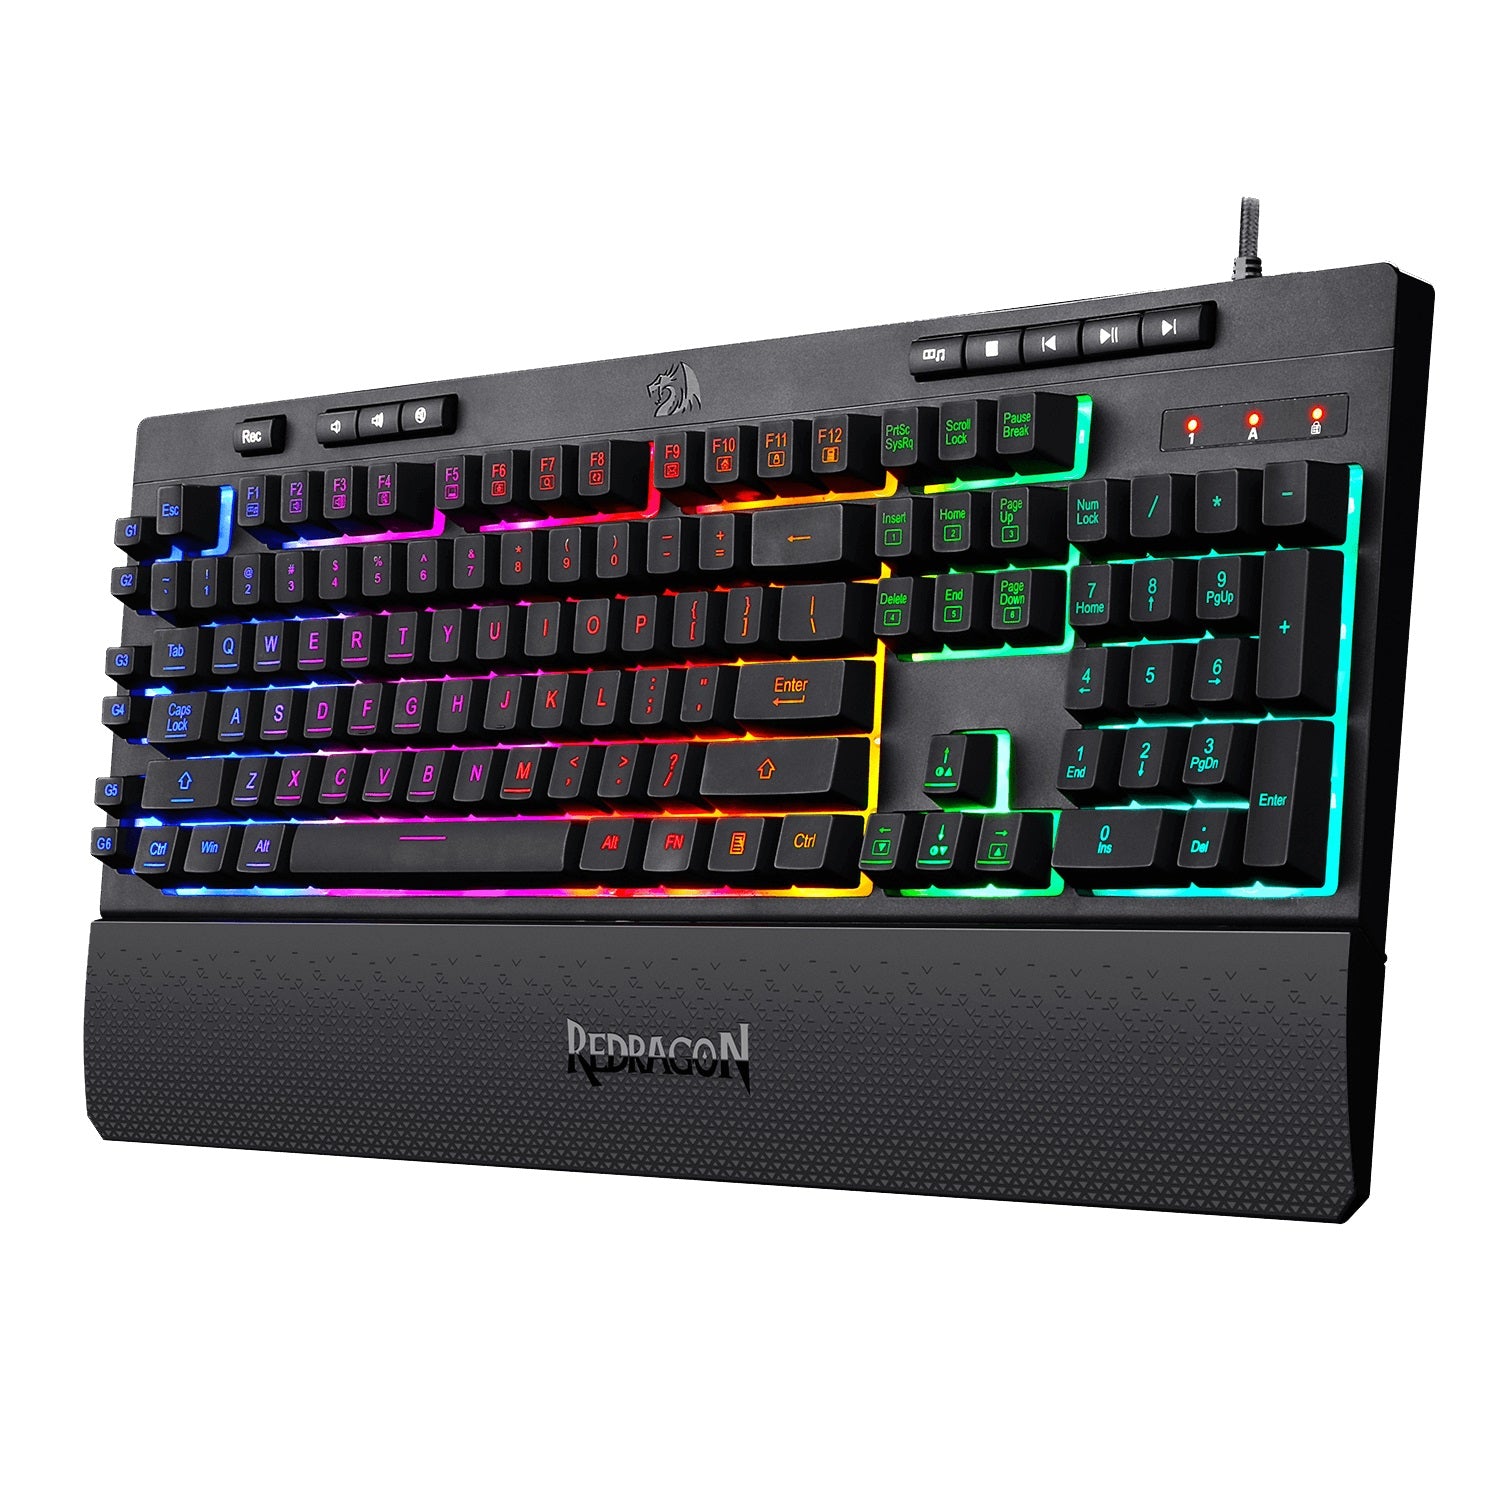 Redragon K512 Shiva RGB Membrane Gaming Keyboard with Multimedia Keys